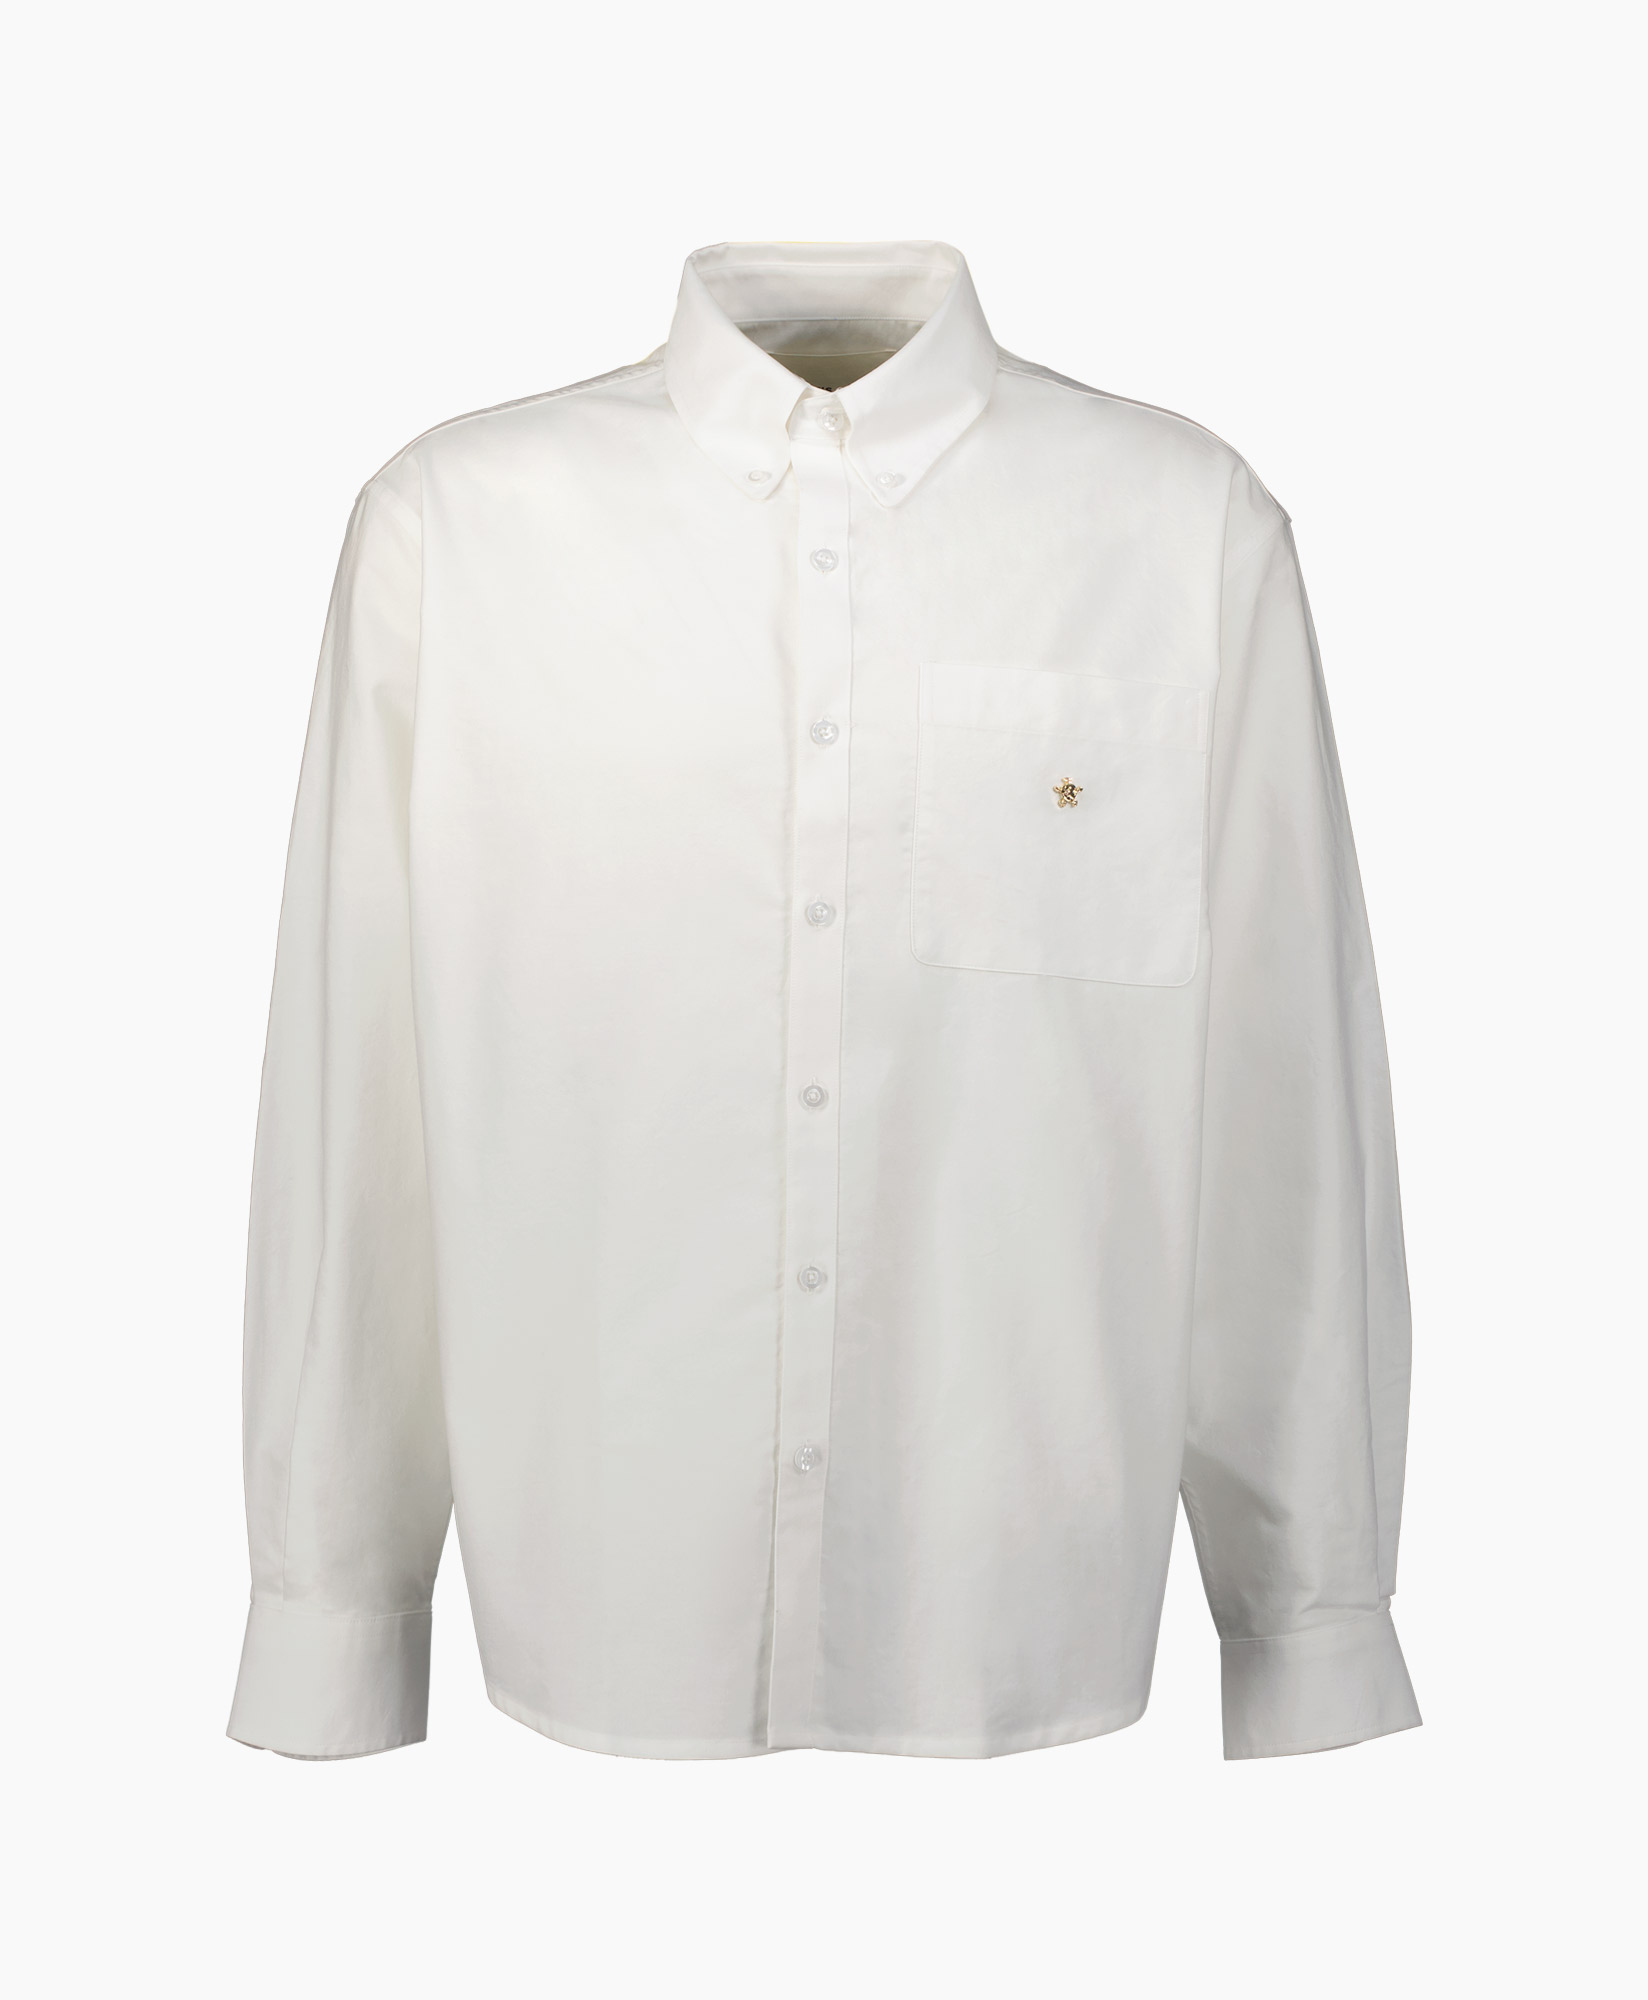 Overhemd Oxford Shirt Wit